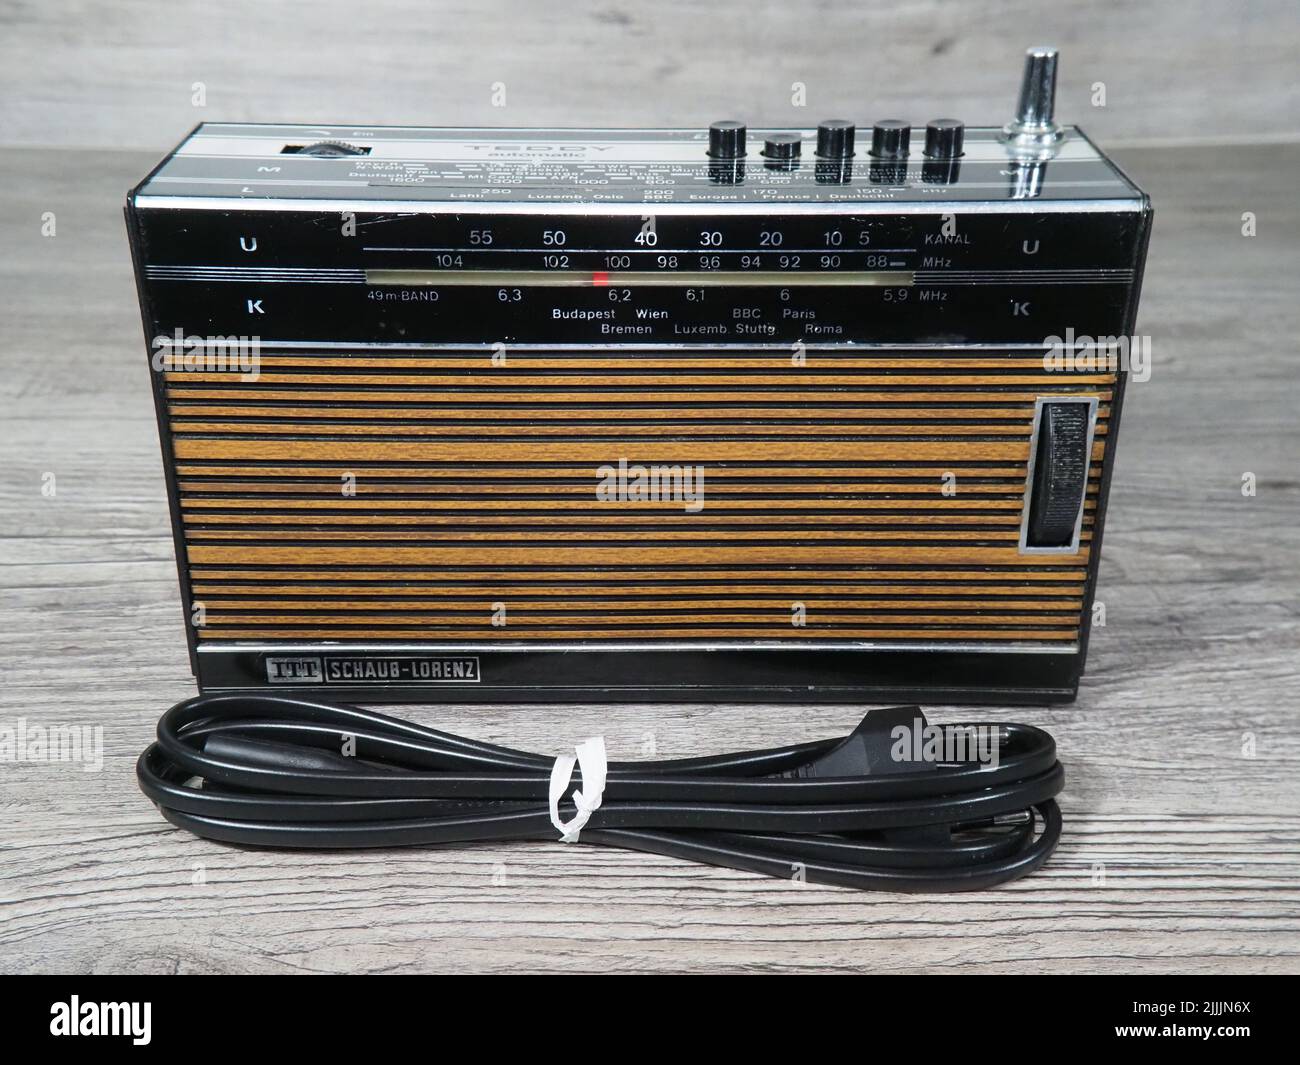 ITT Schaub-Lorenz Teddy Portable Radio on drift wood surface with power  cable Stock Photo - Alamy